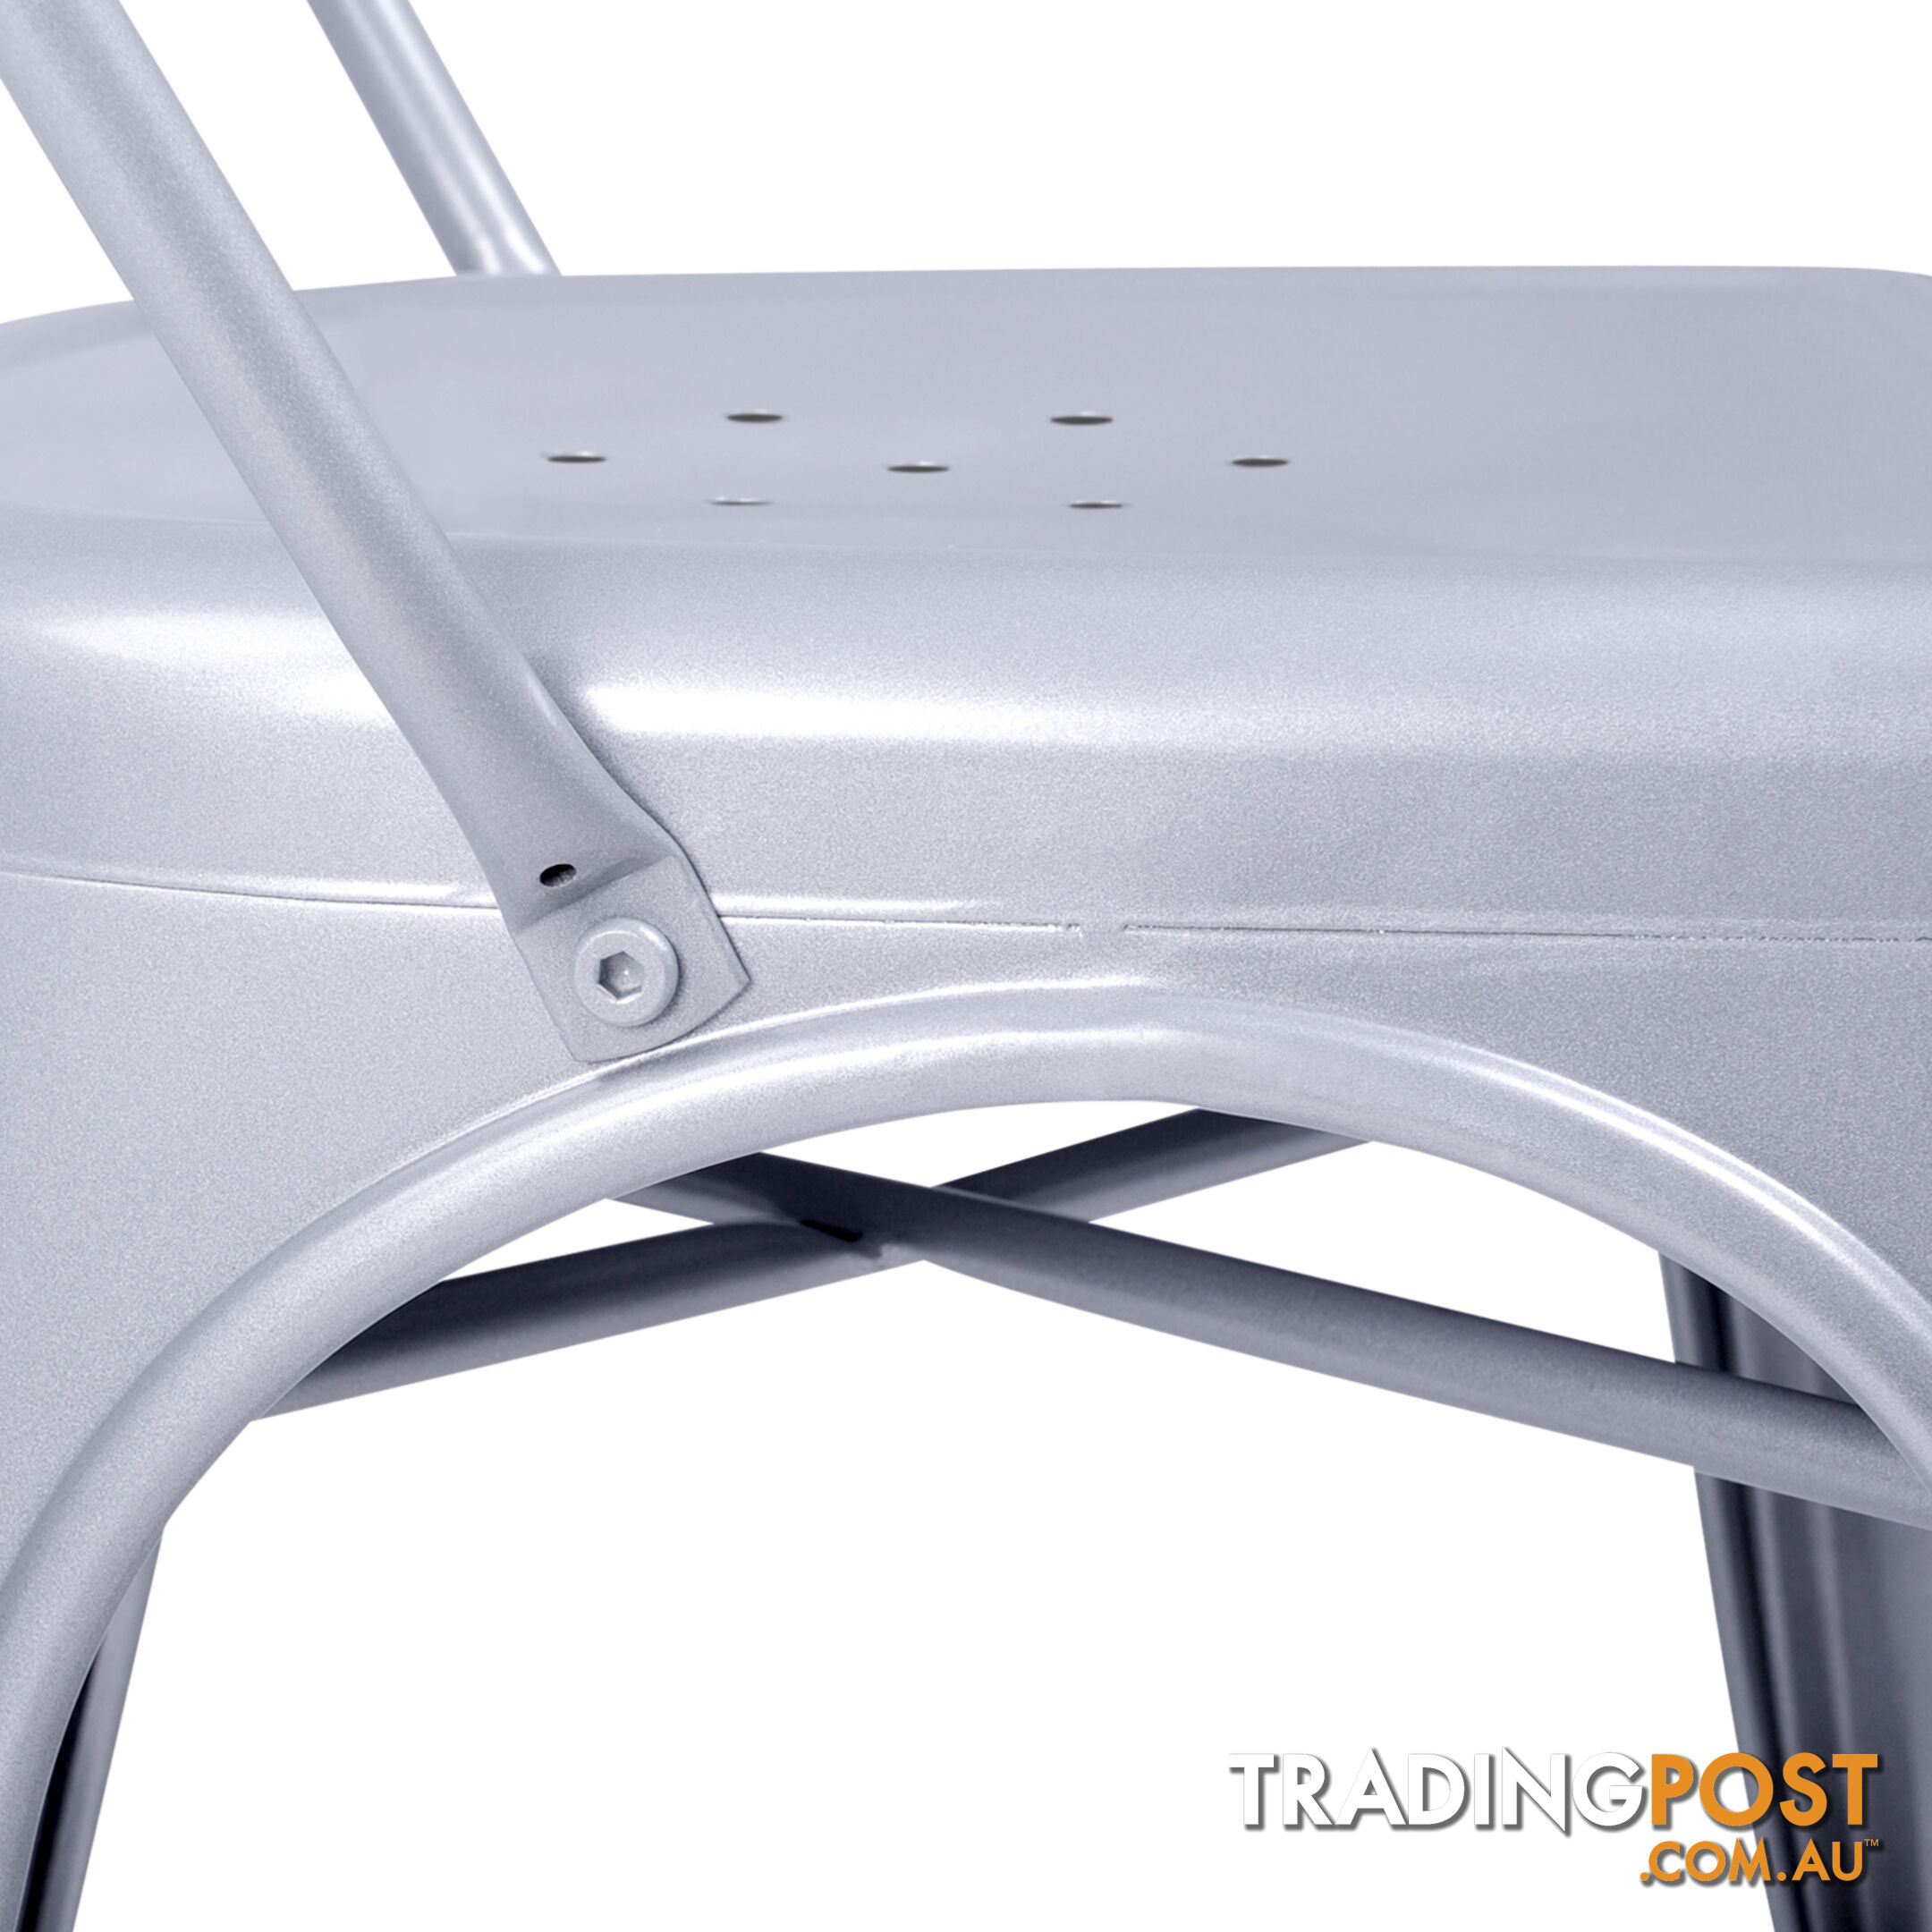 Set of 4 Replica Tolix Dining Metal Chair Gloss Metal